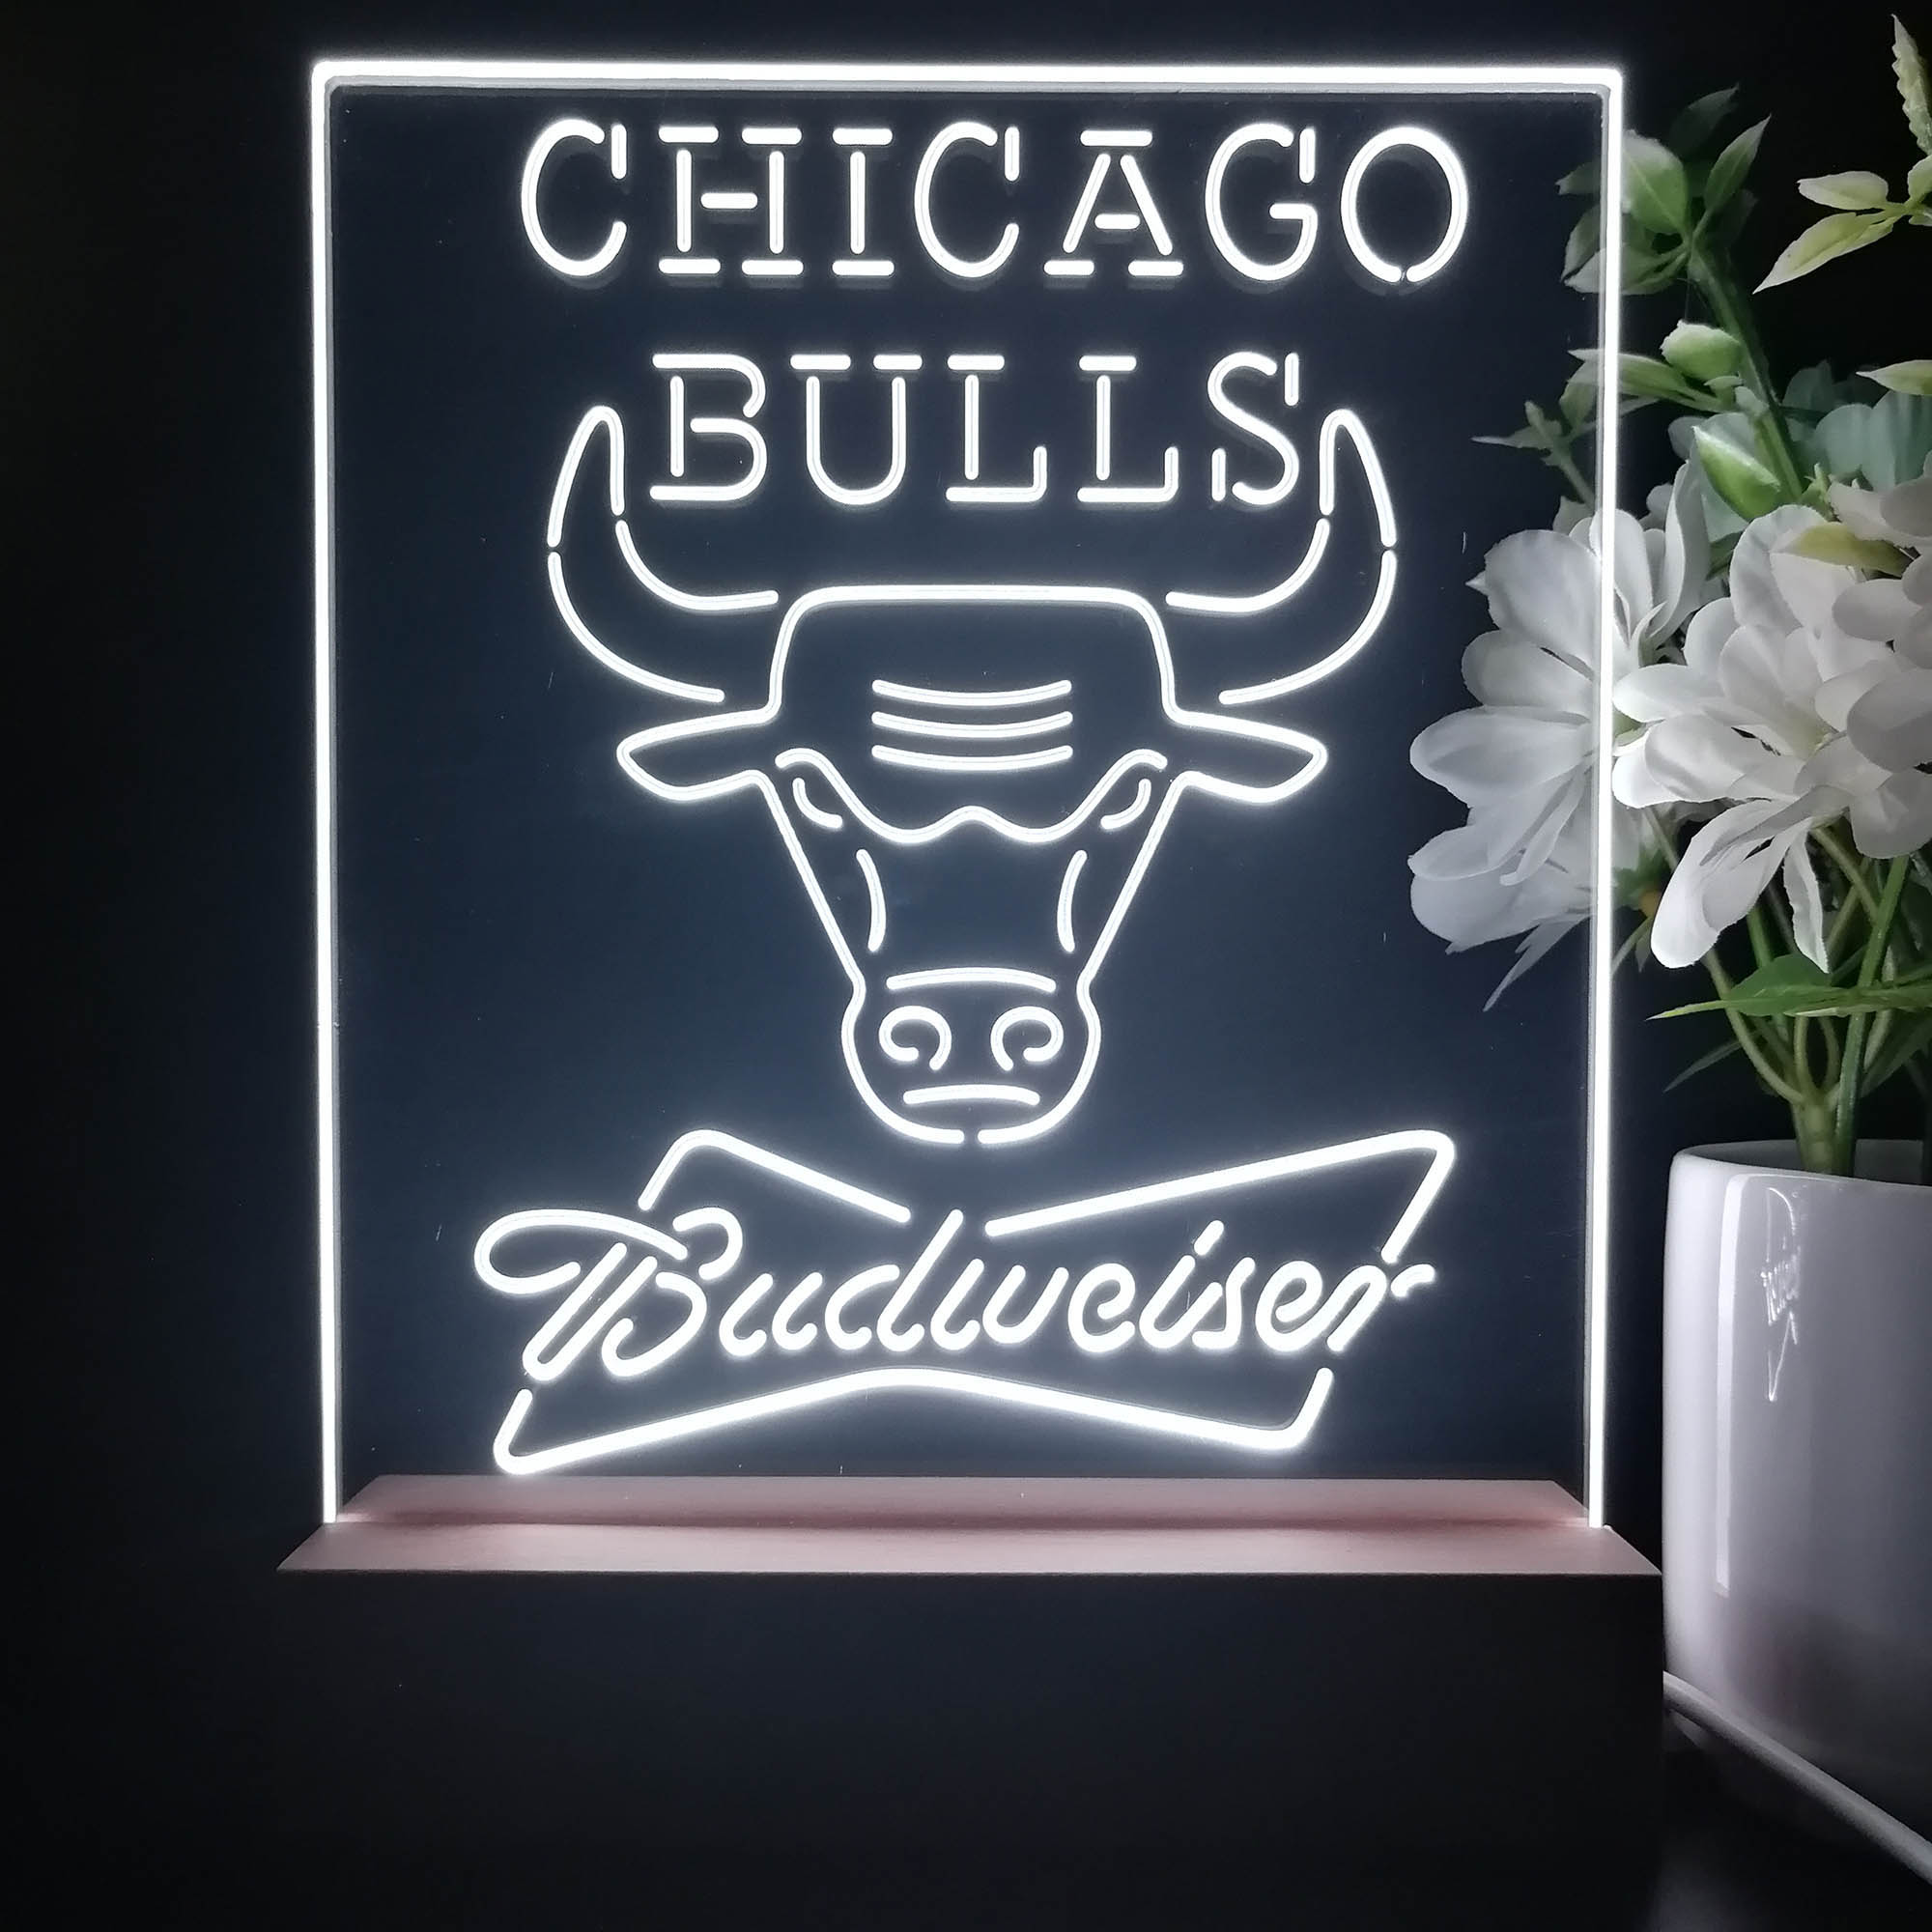 Chicago Bulls Budweiser Neon Sign Pub Bar Lamp